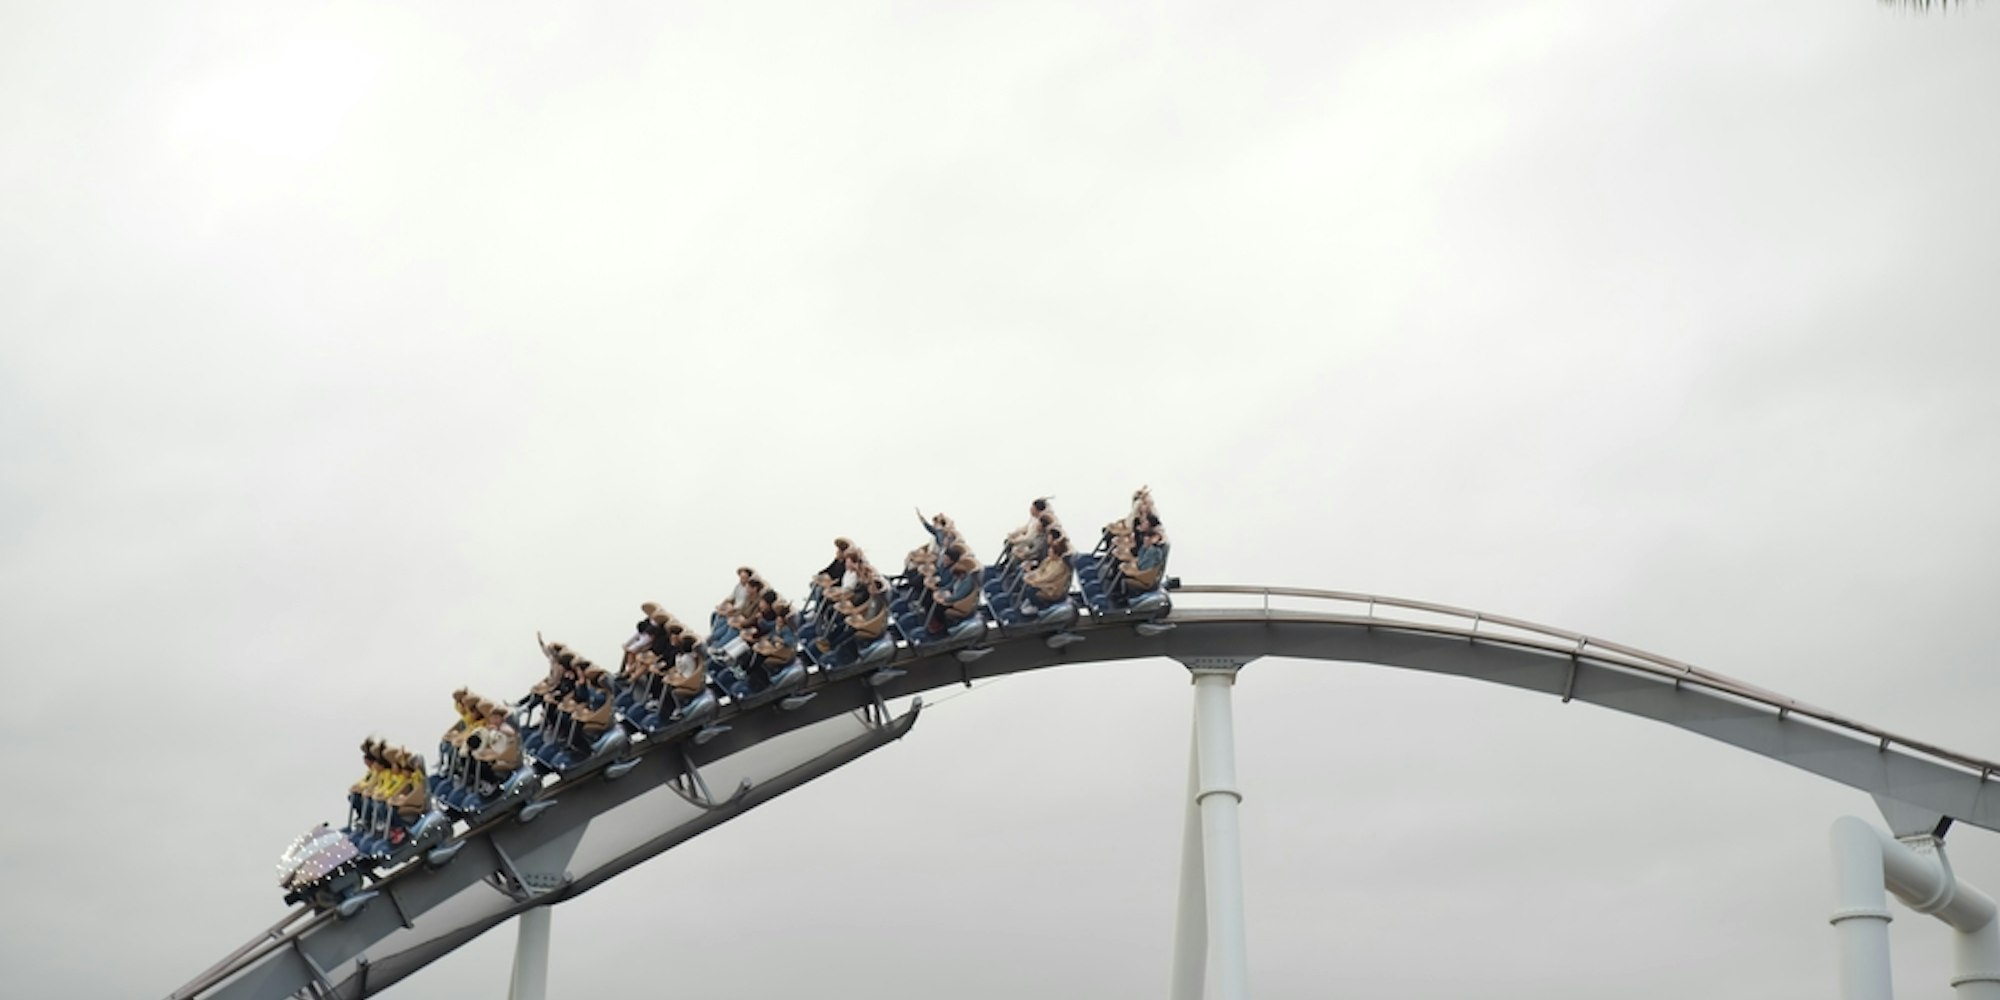 Roller coaster rides at Universal Studios Japan